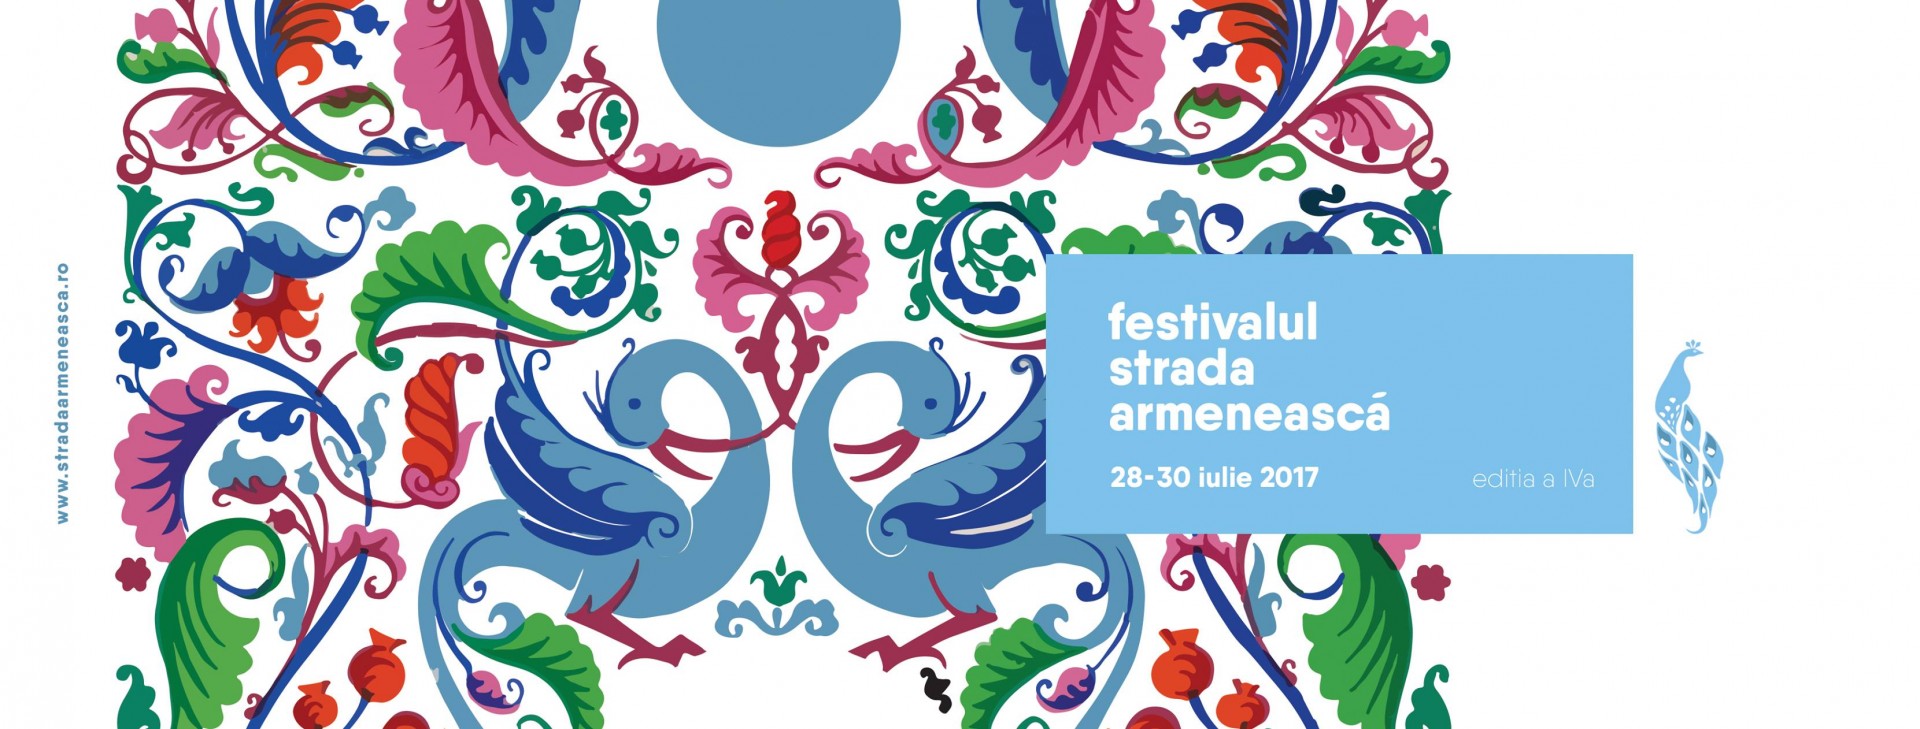 Festivalul Strada Armeneasca 2017 afisul